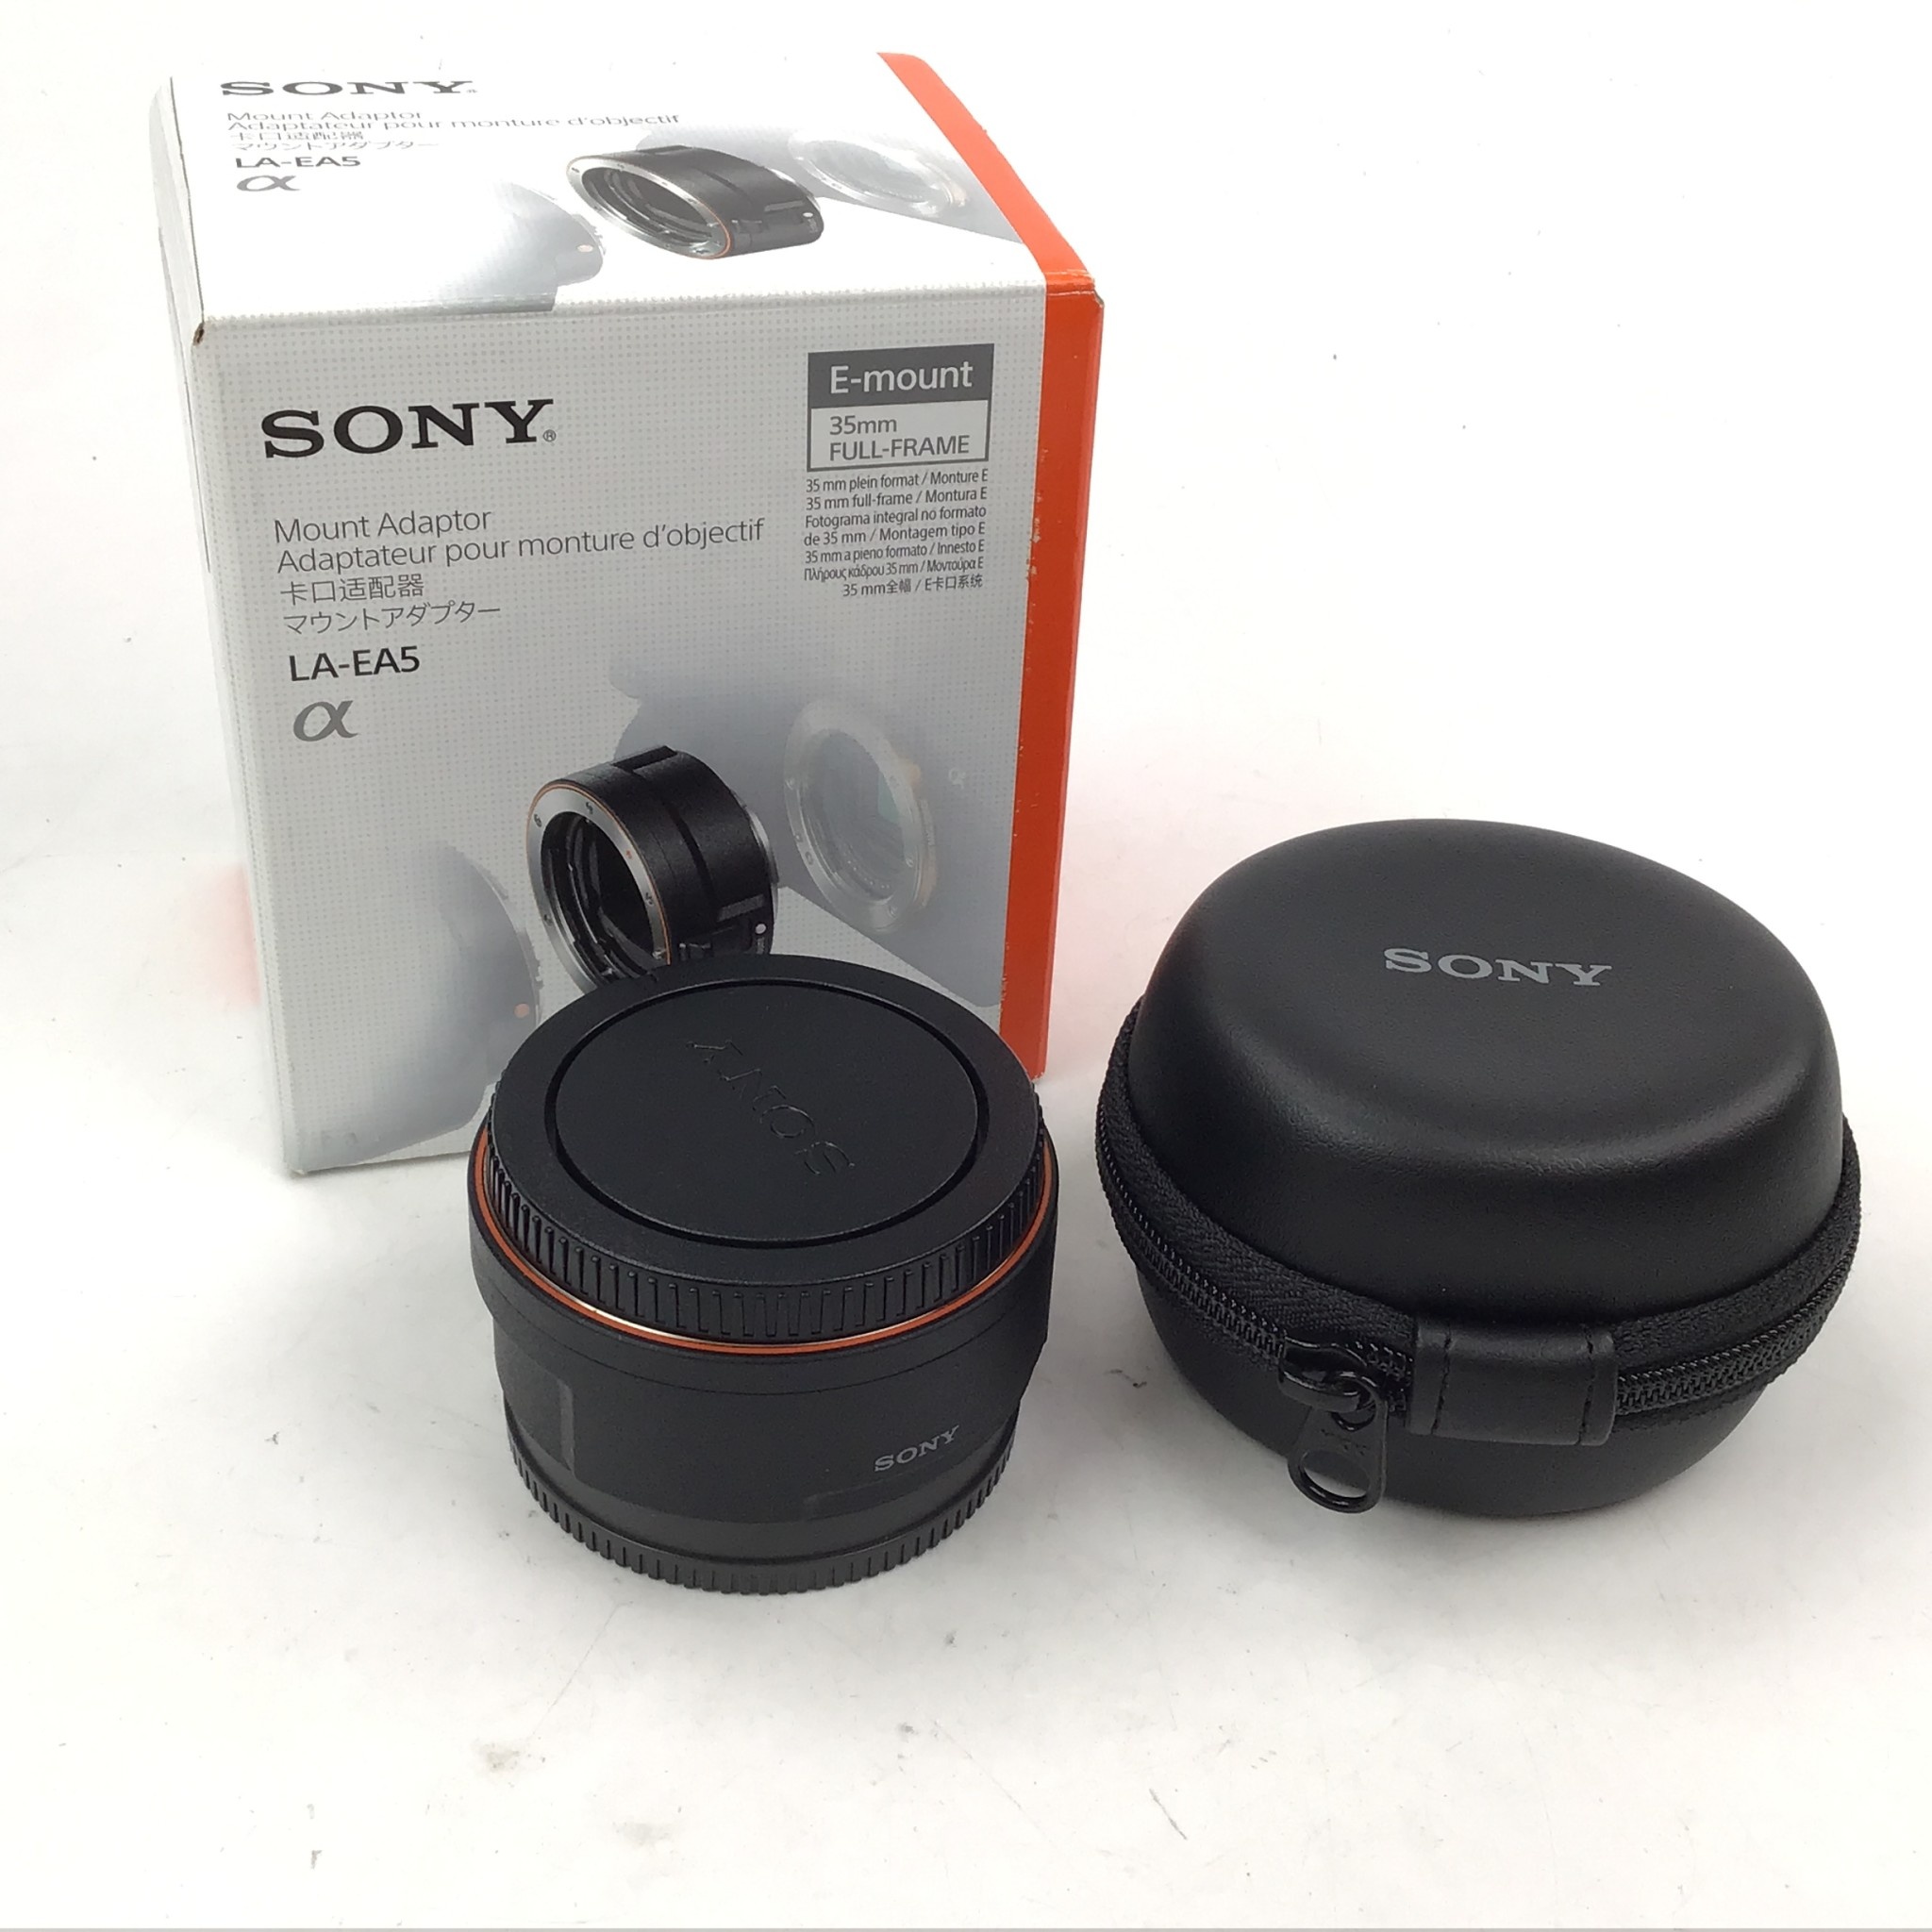 SONY Sony Mount Adapter LA-EA5 in Box Used EX - Biggs Camera